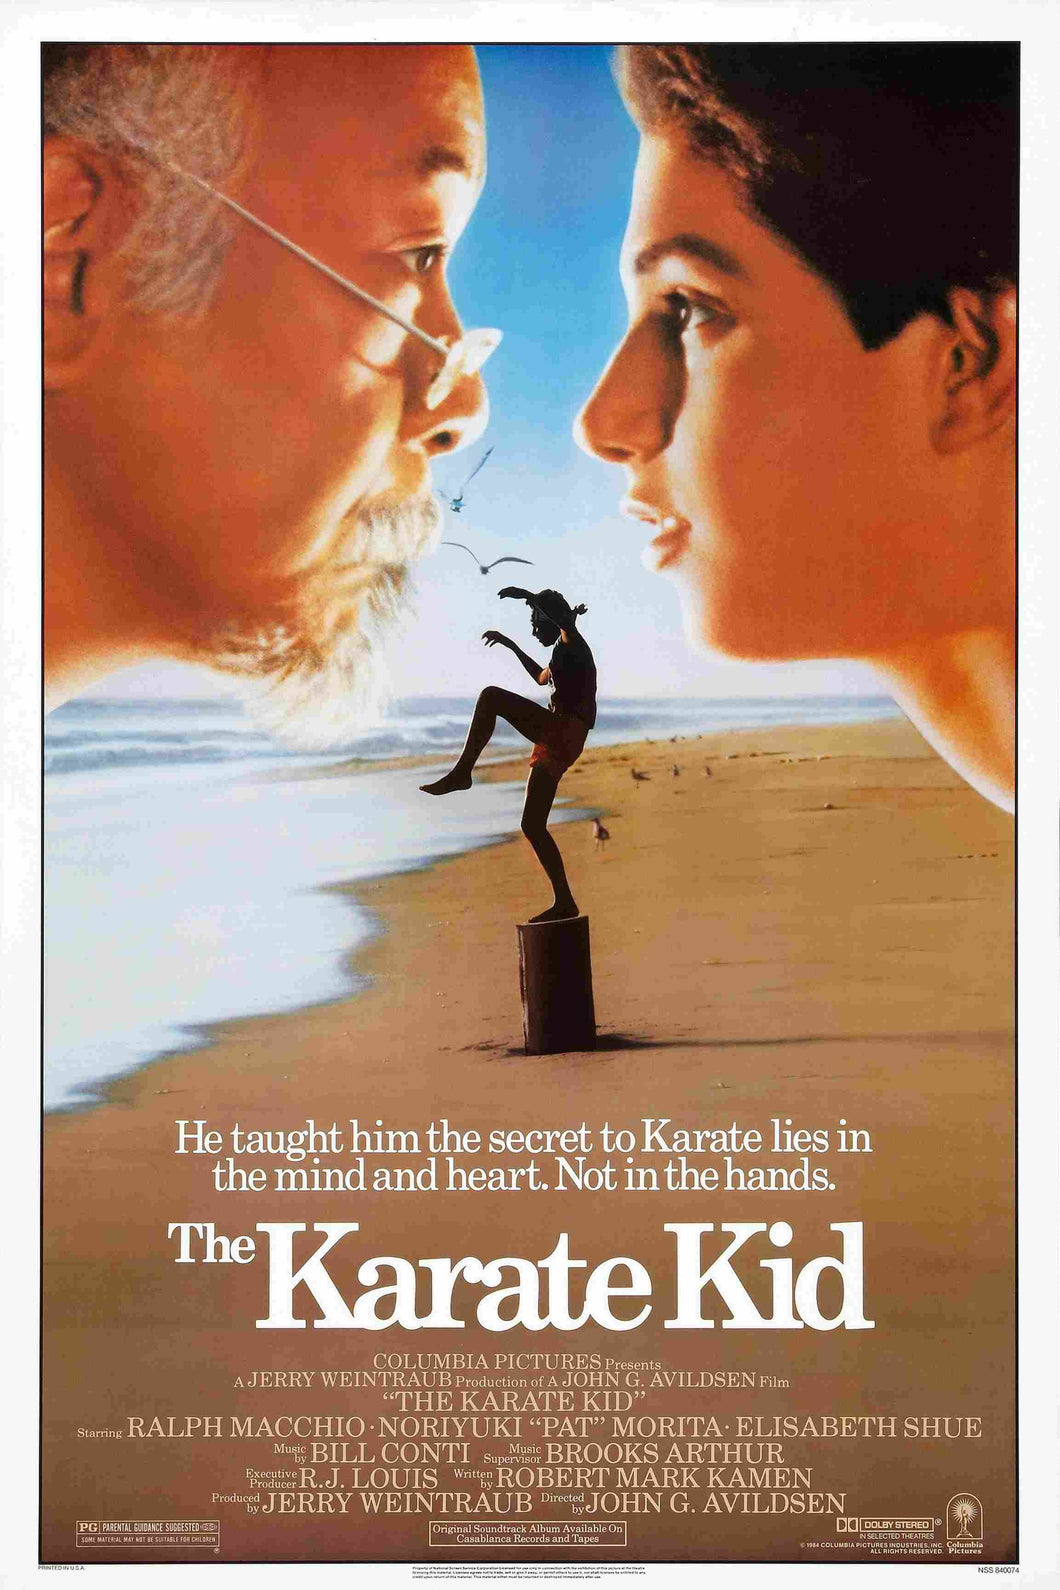 Karate Kid - Poster - egoamo.co.za